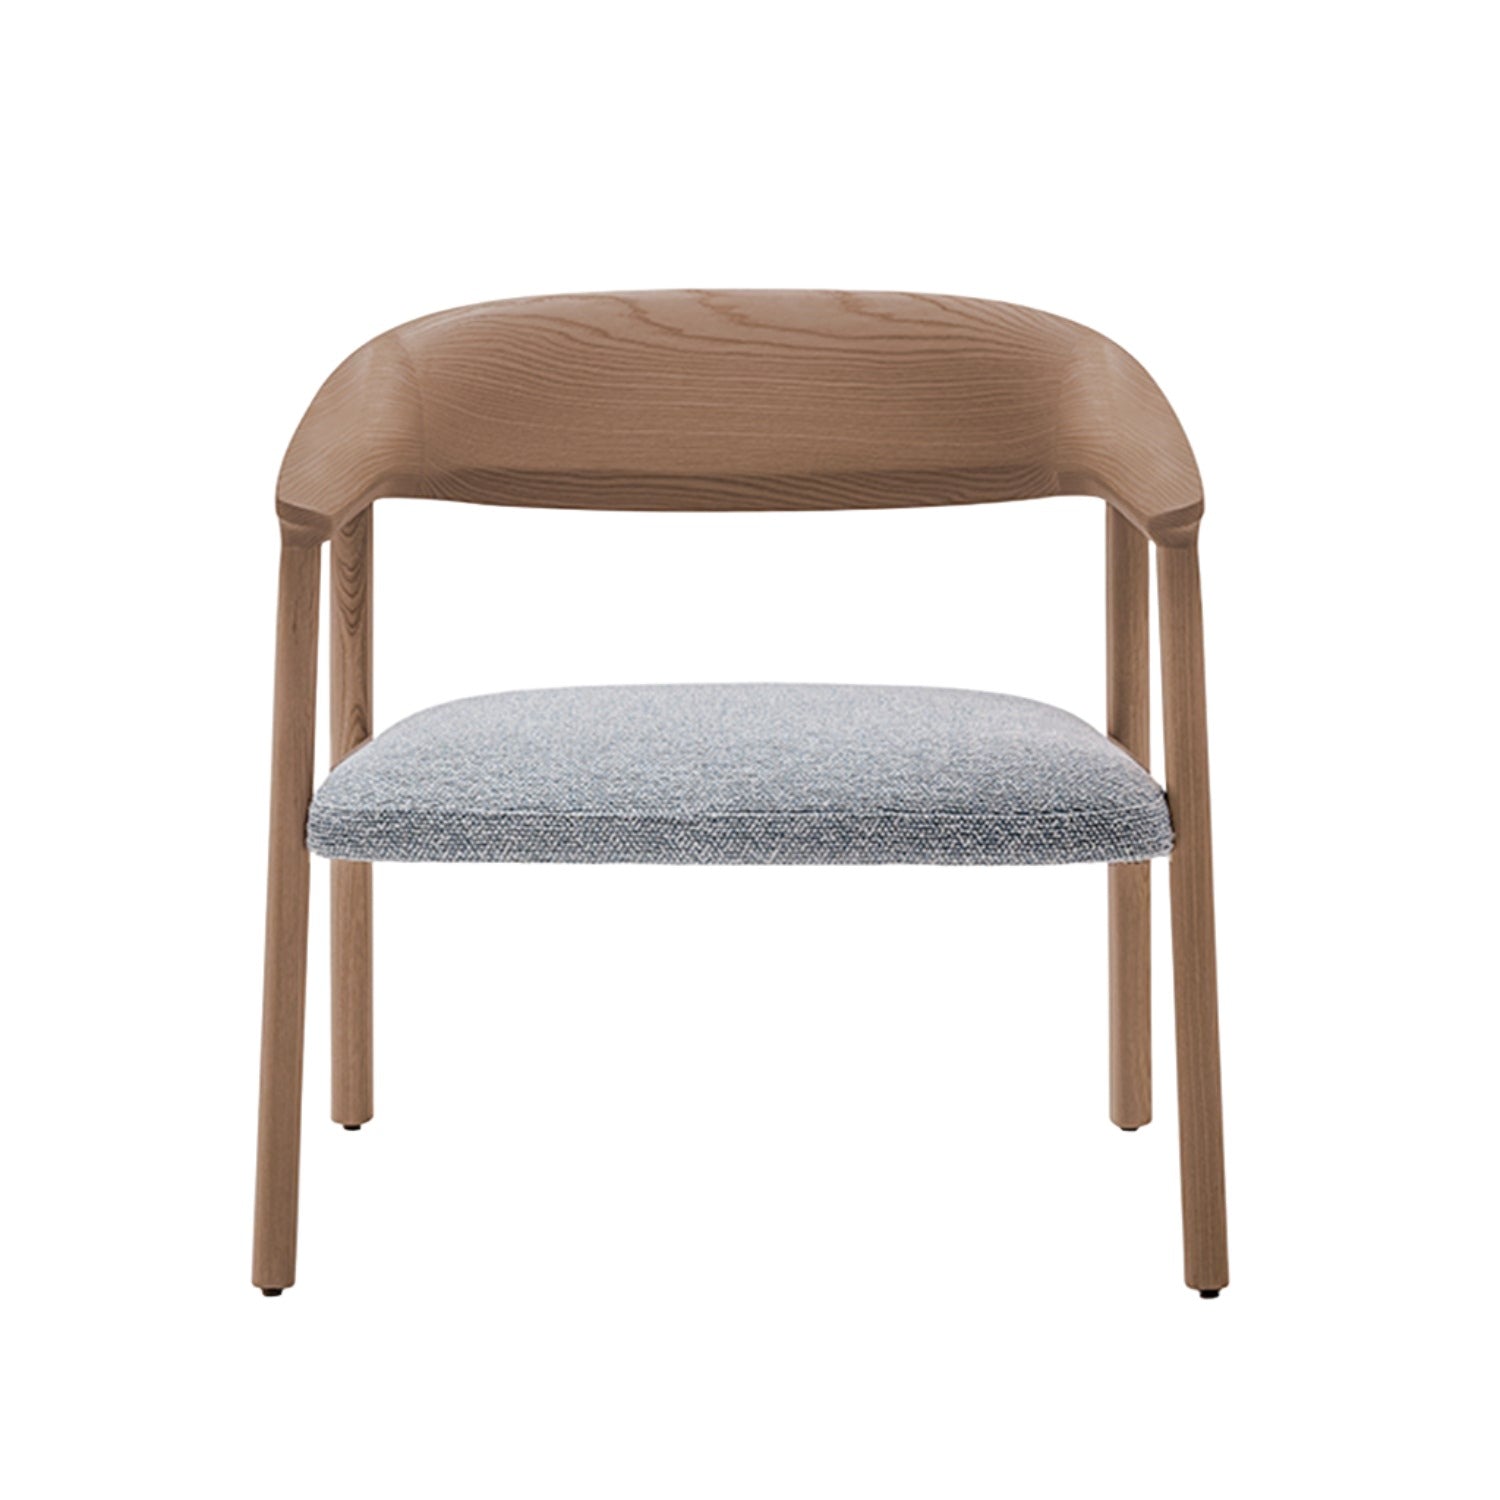 Pedrali Hera 2689 Hera Lounge Chair in walnut with grey upholstery